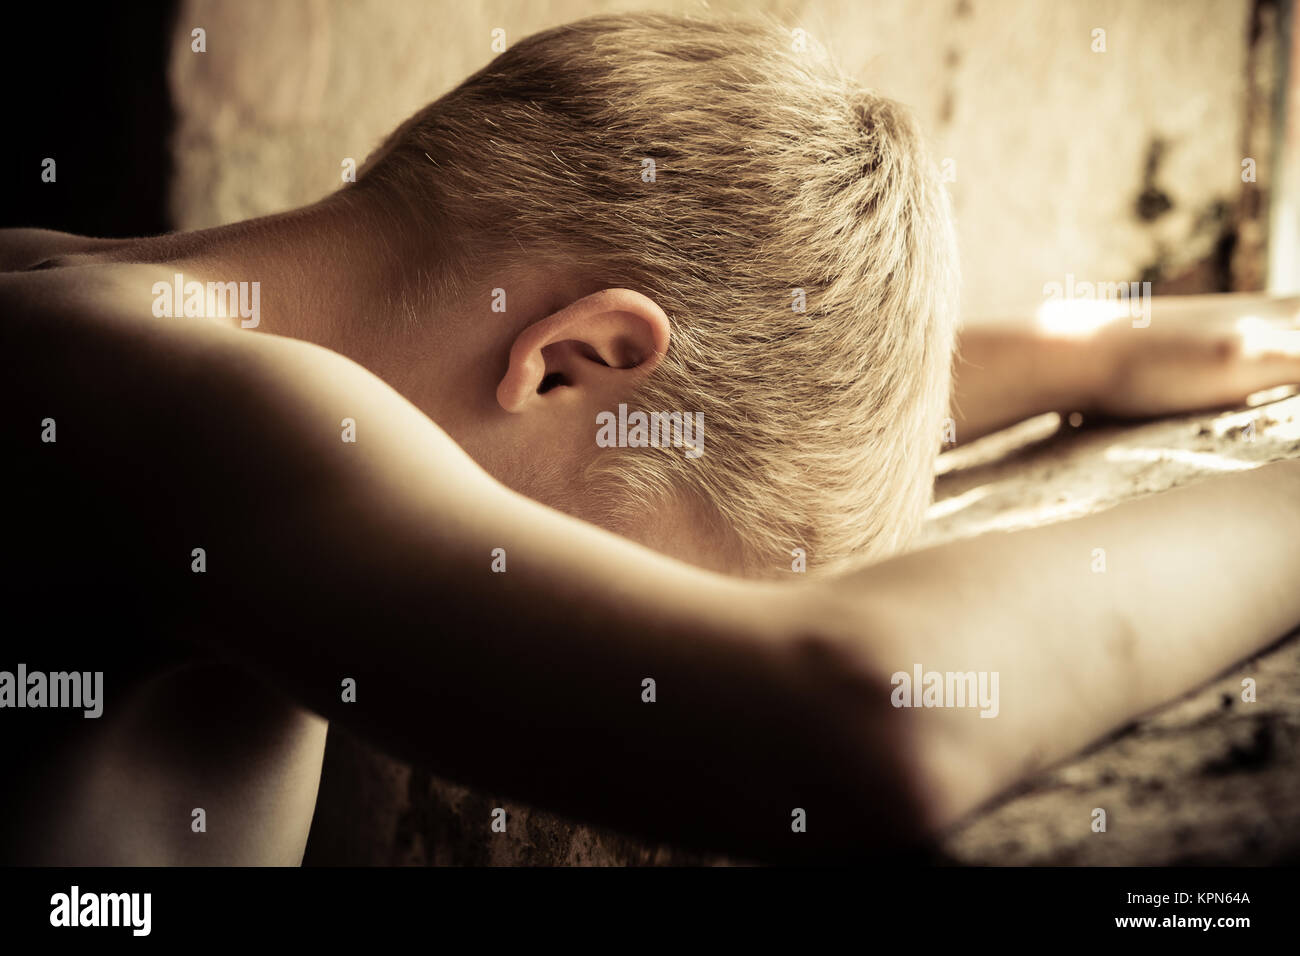 Garçon torse nu, la tête en bas Photo Stock - Alamy